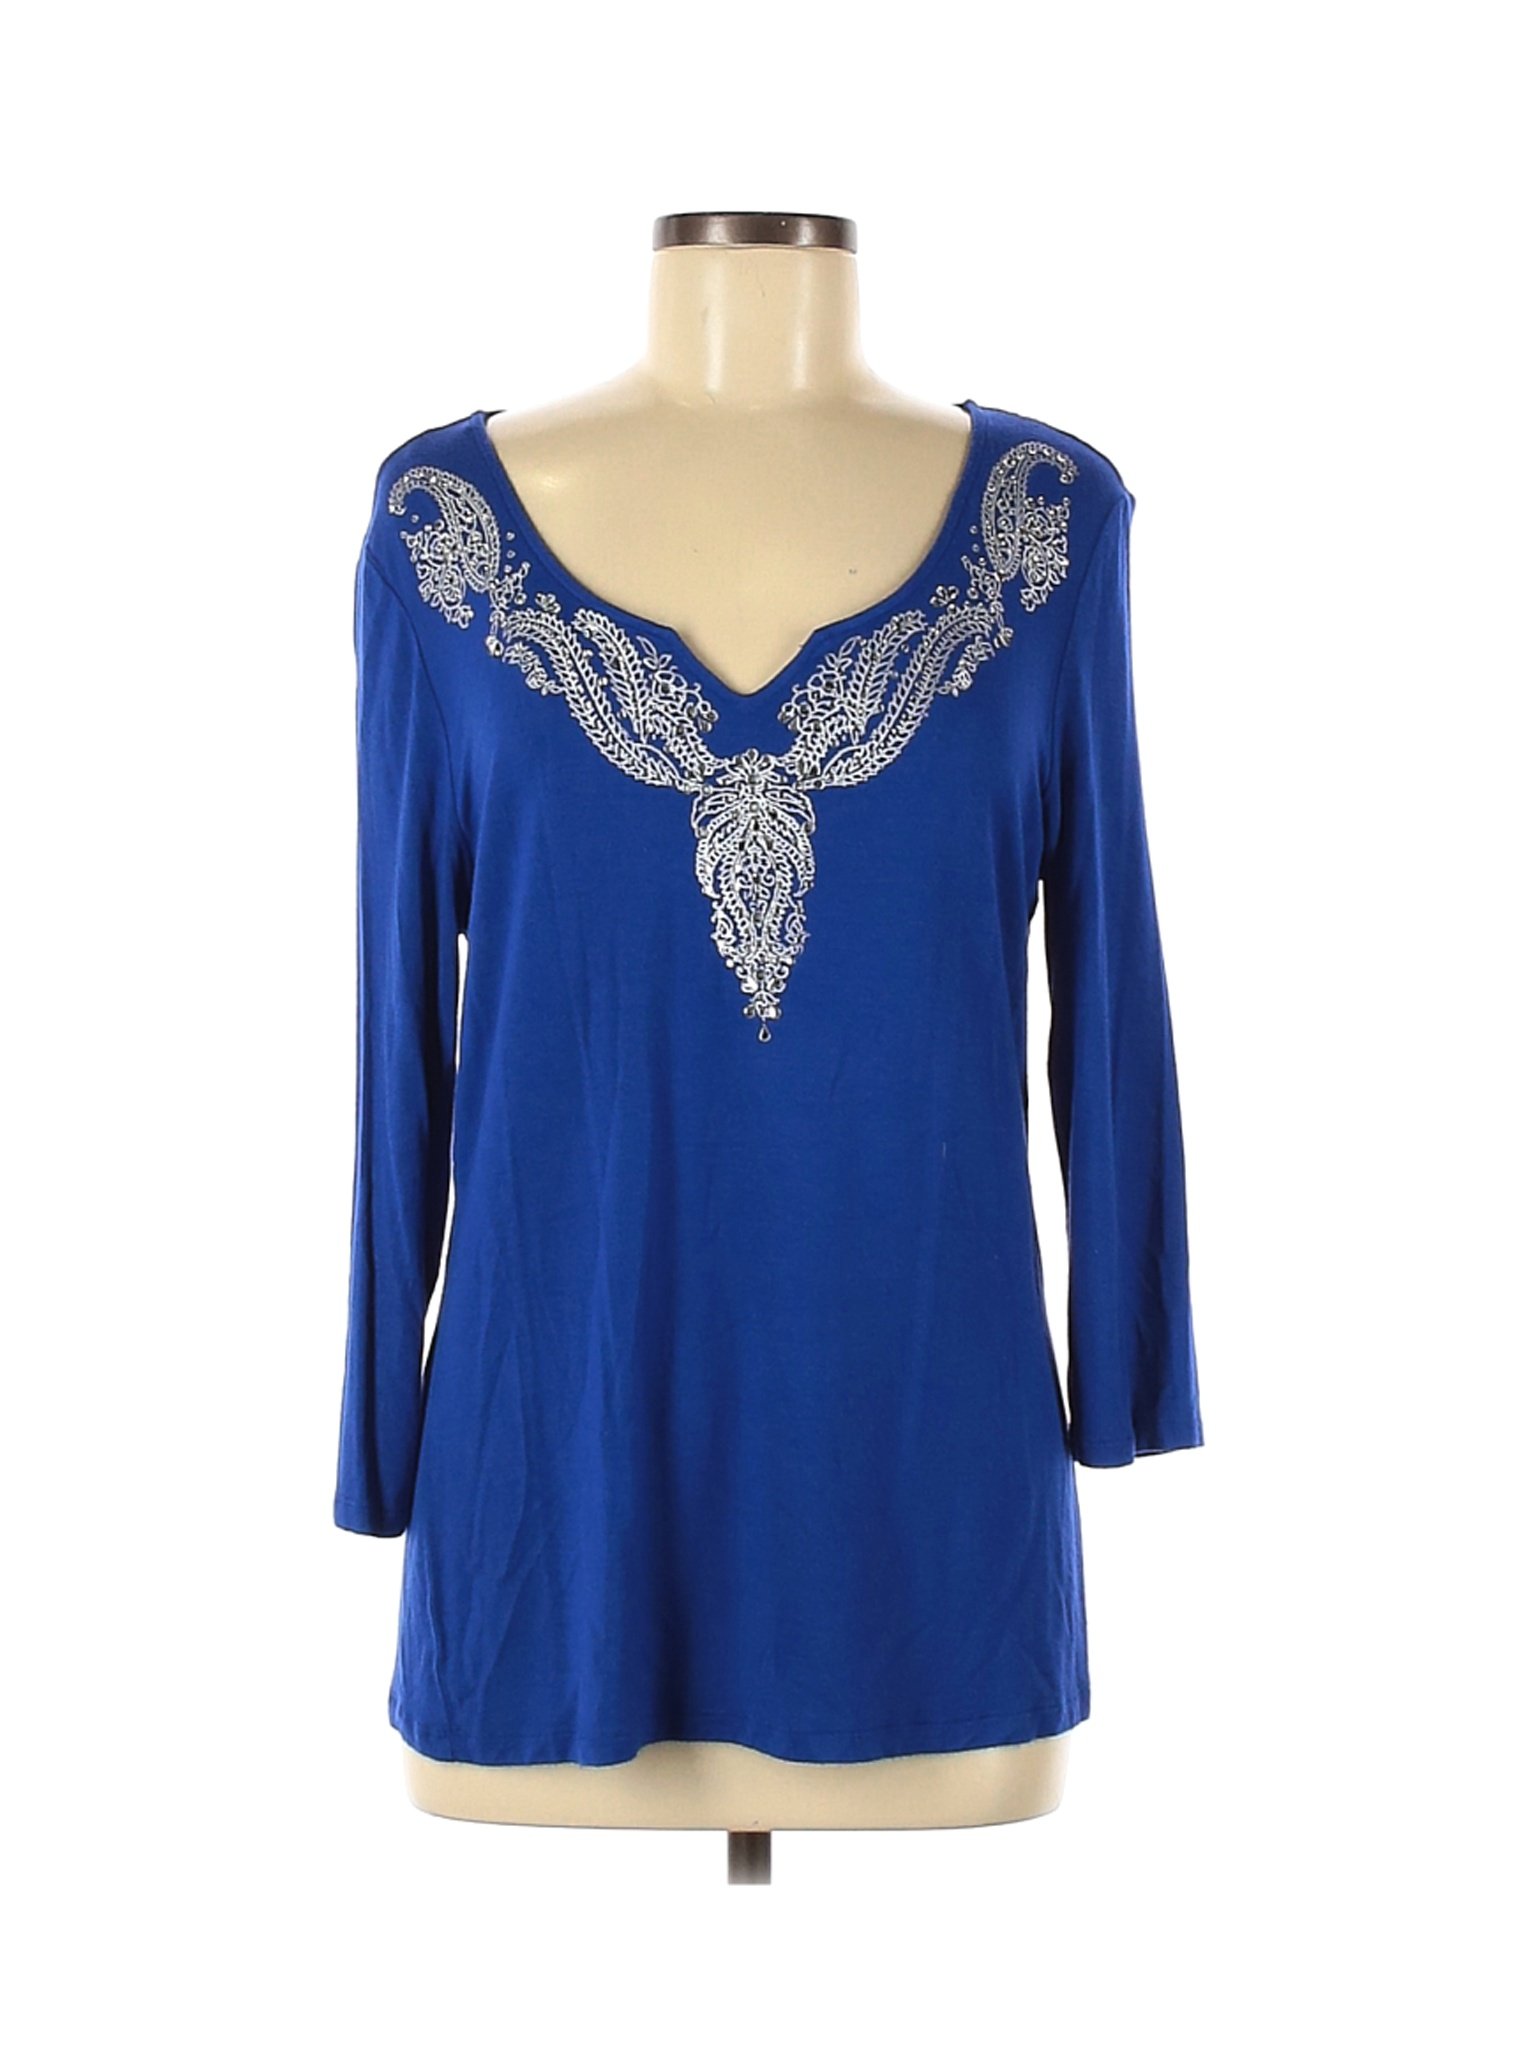 Laura Ashley Women Blue 3/4 Sleeve Top M | eBay